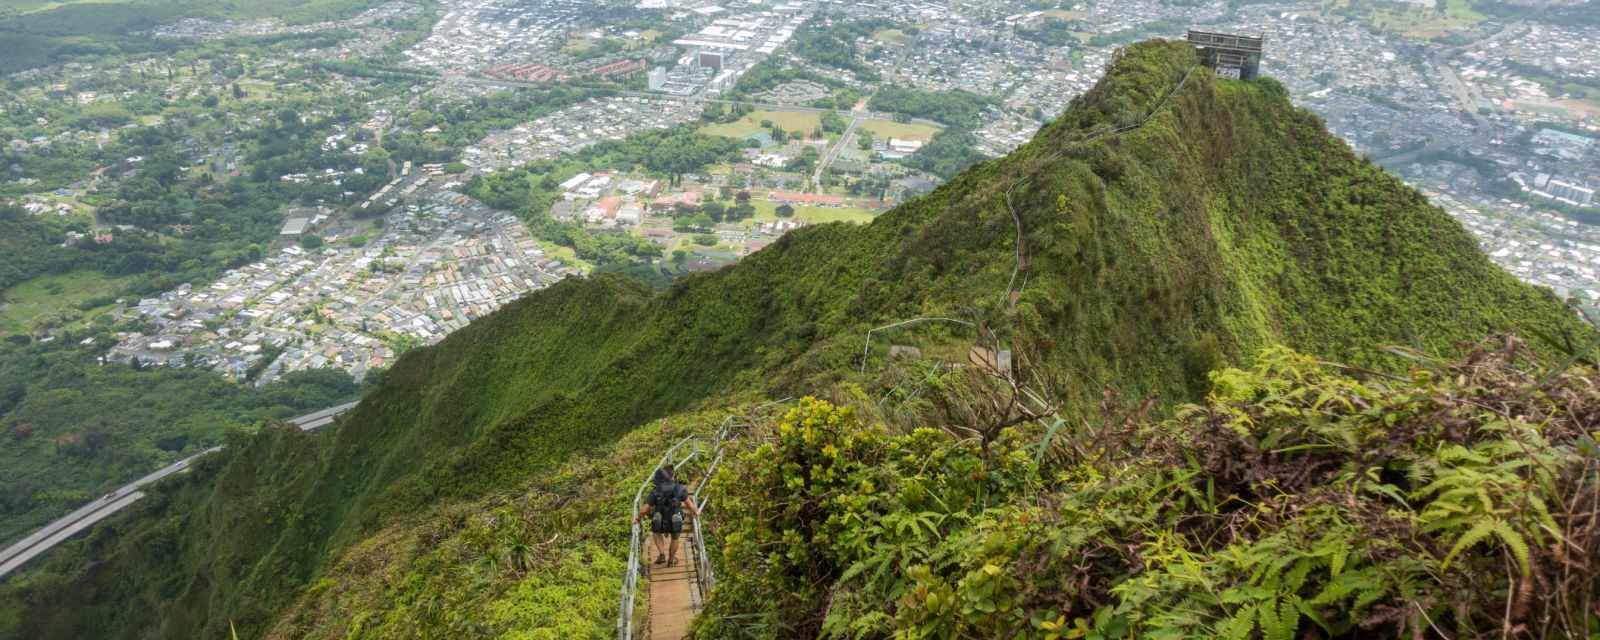 Haiku Stairs in Oahu, Hawaii - The Legal Way - Latest Updates 2022